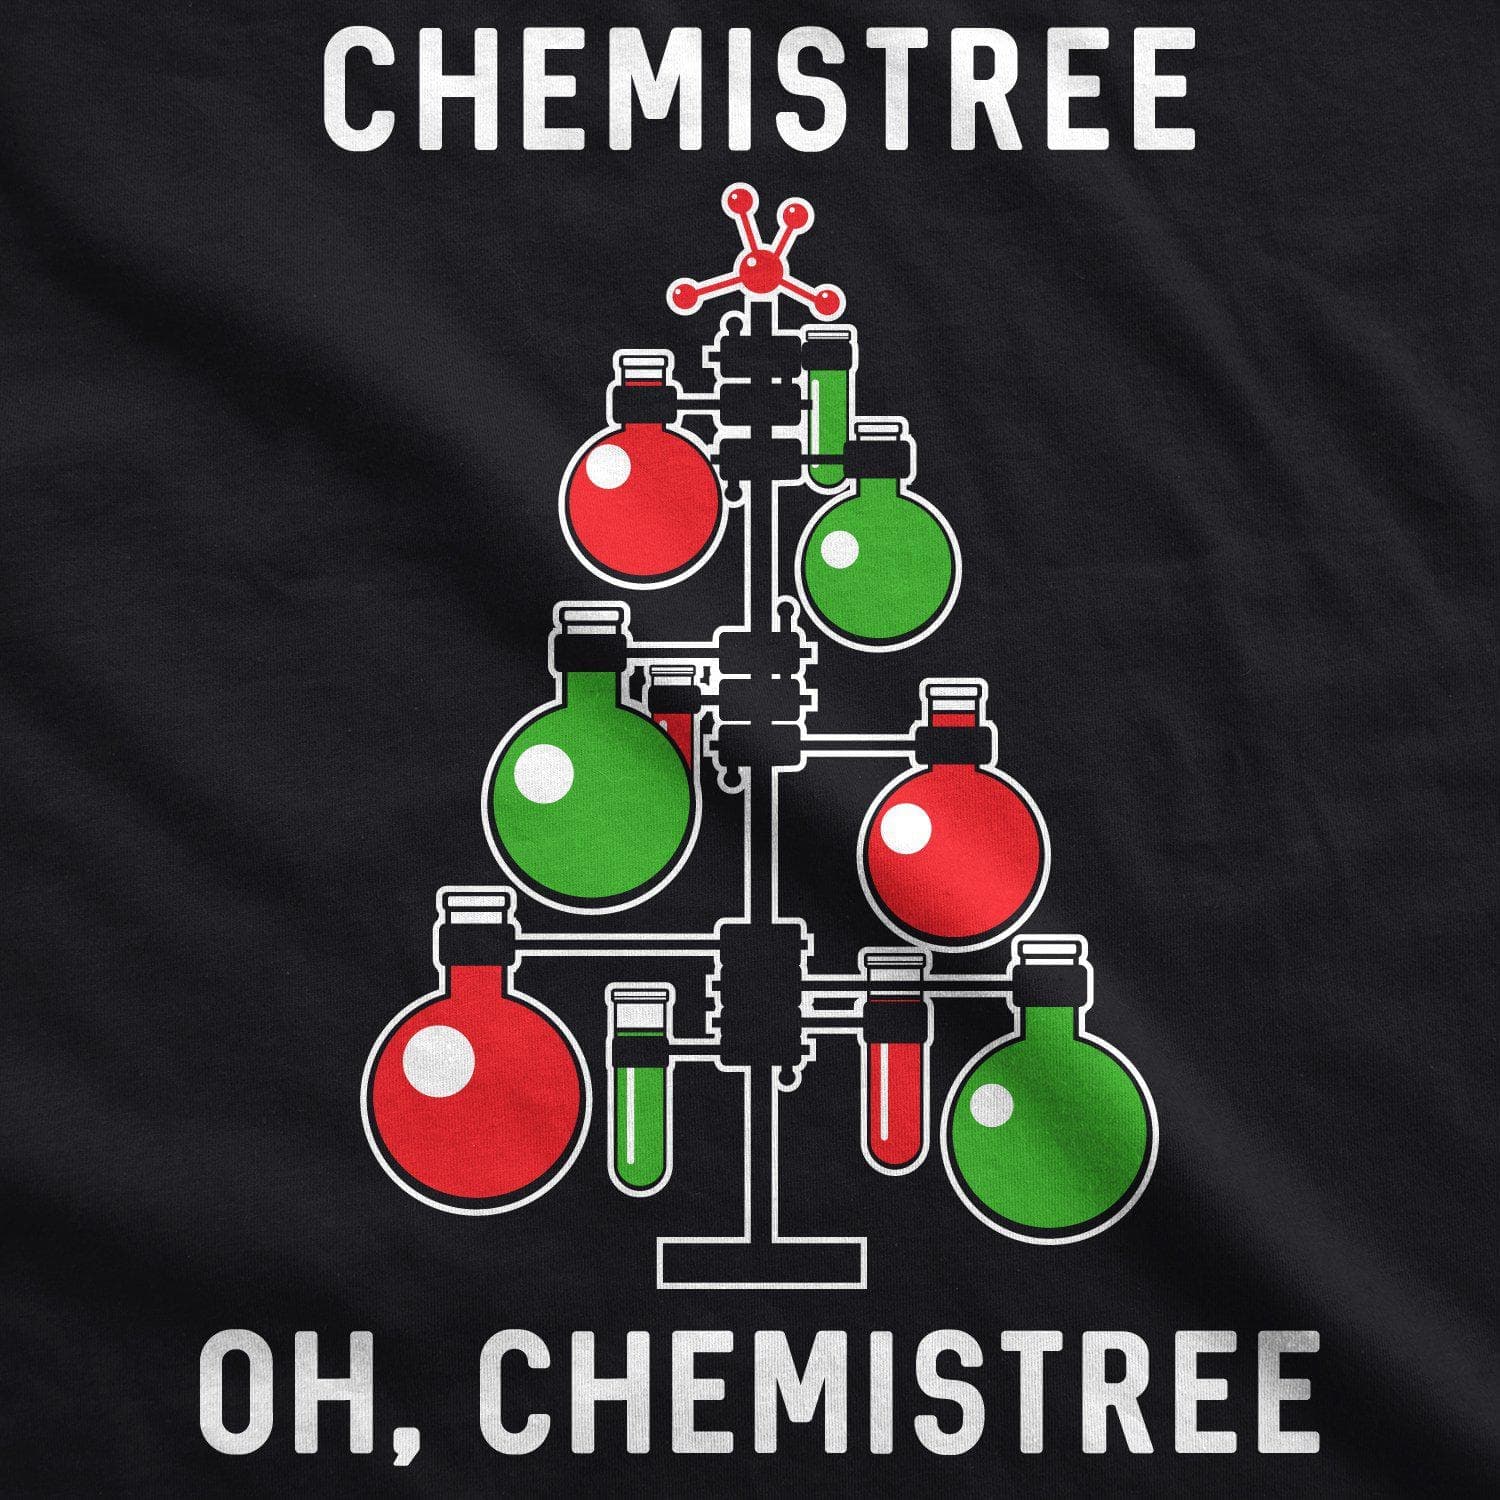 Chemistree Men's Tshirt  -  Crazy Dog T-Shirts